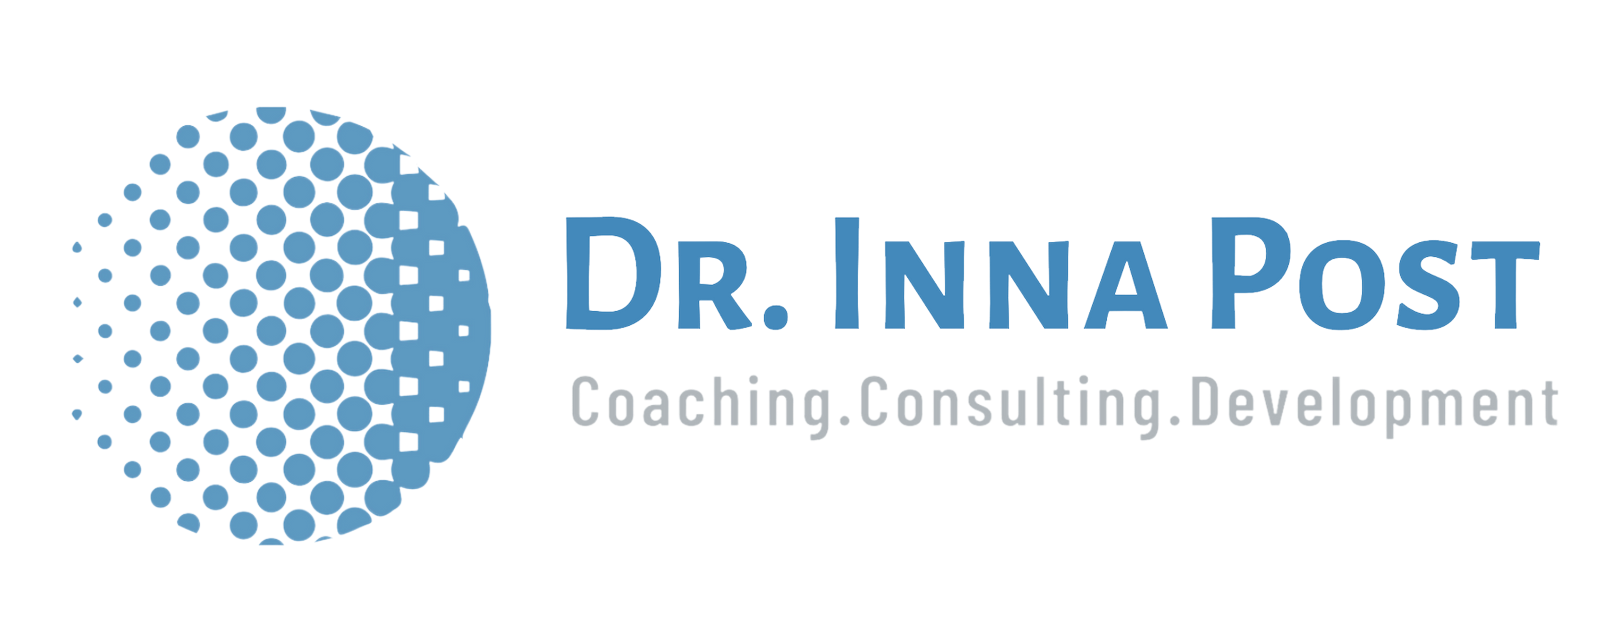 Dr. Inna Post Executive Coach New York City Logo